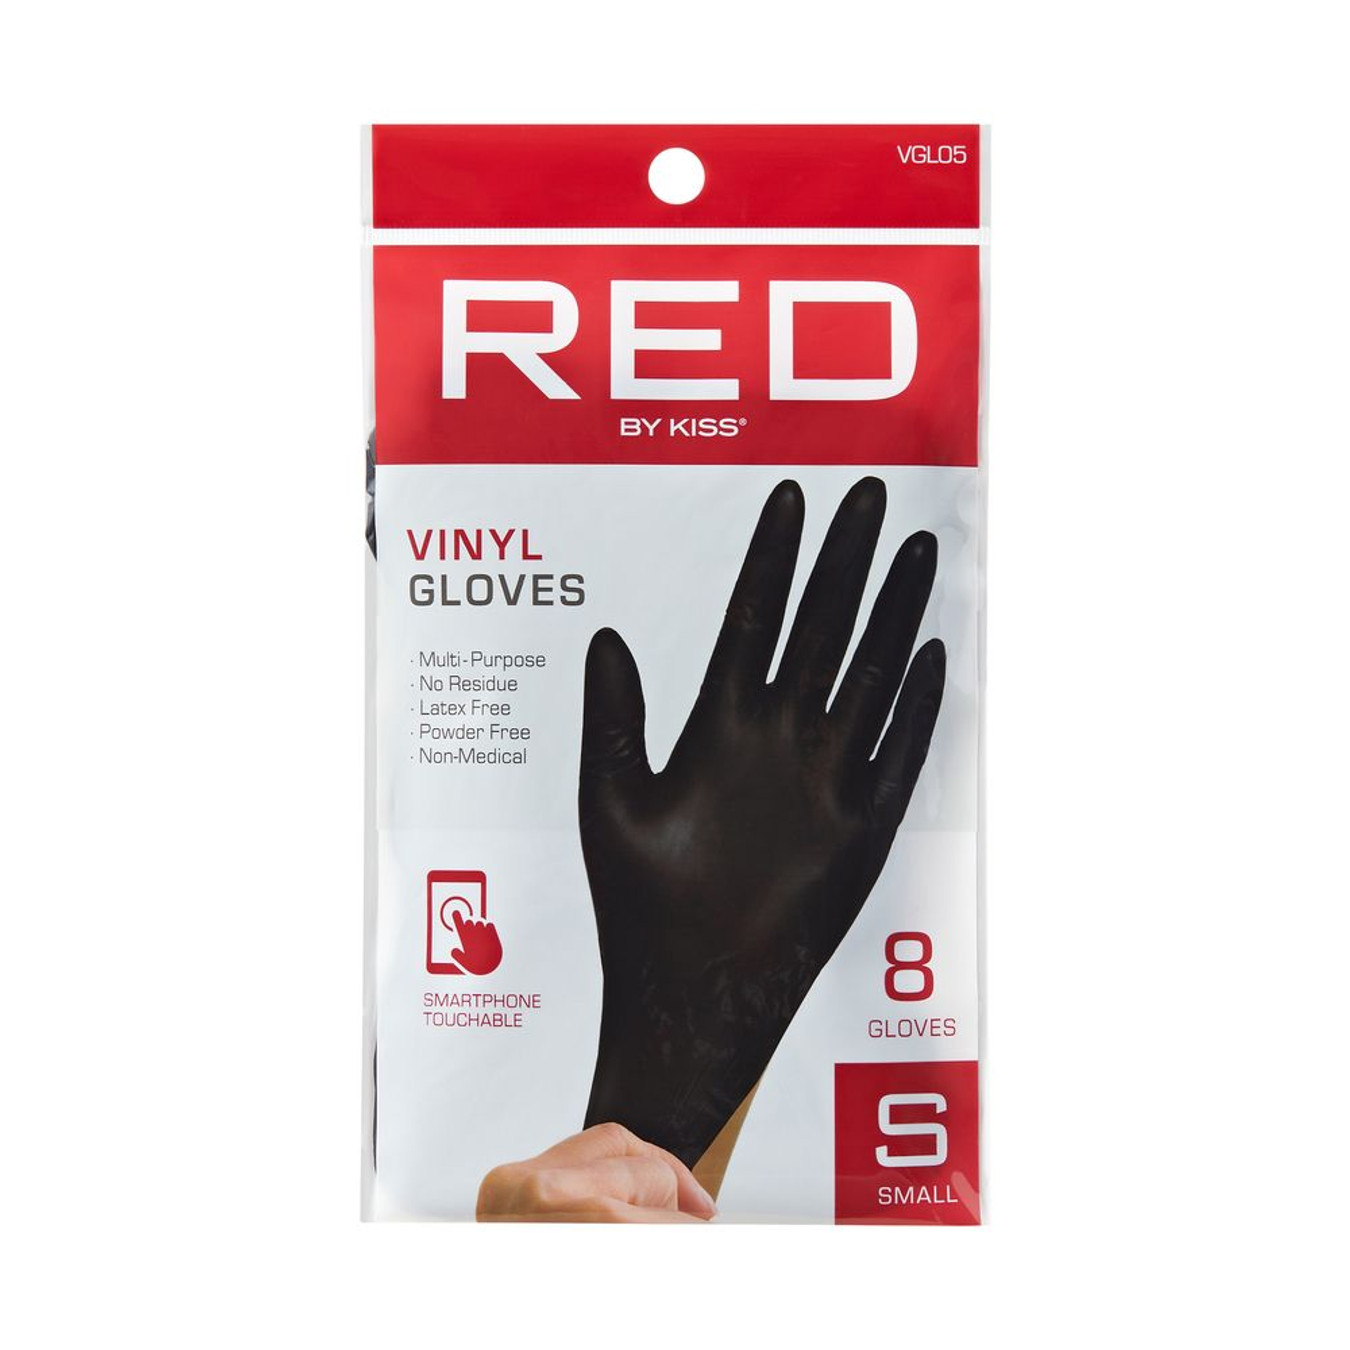 RED by Kiss Black Vinyl Gloves (8pcs)